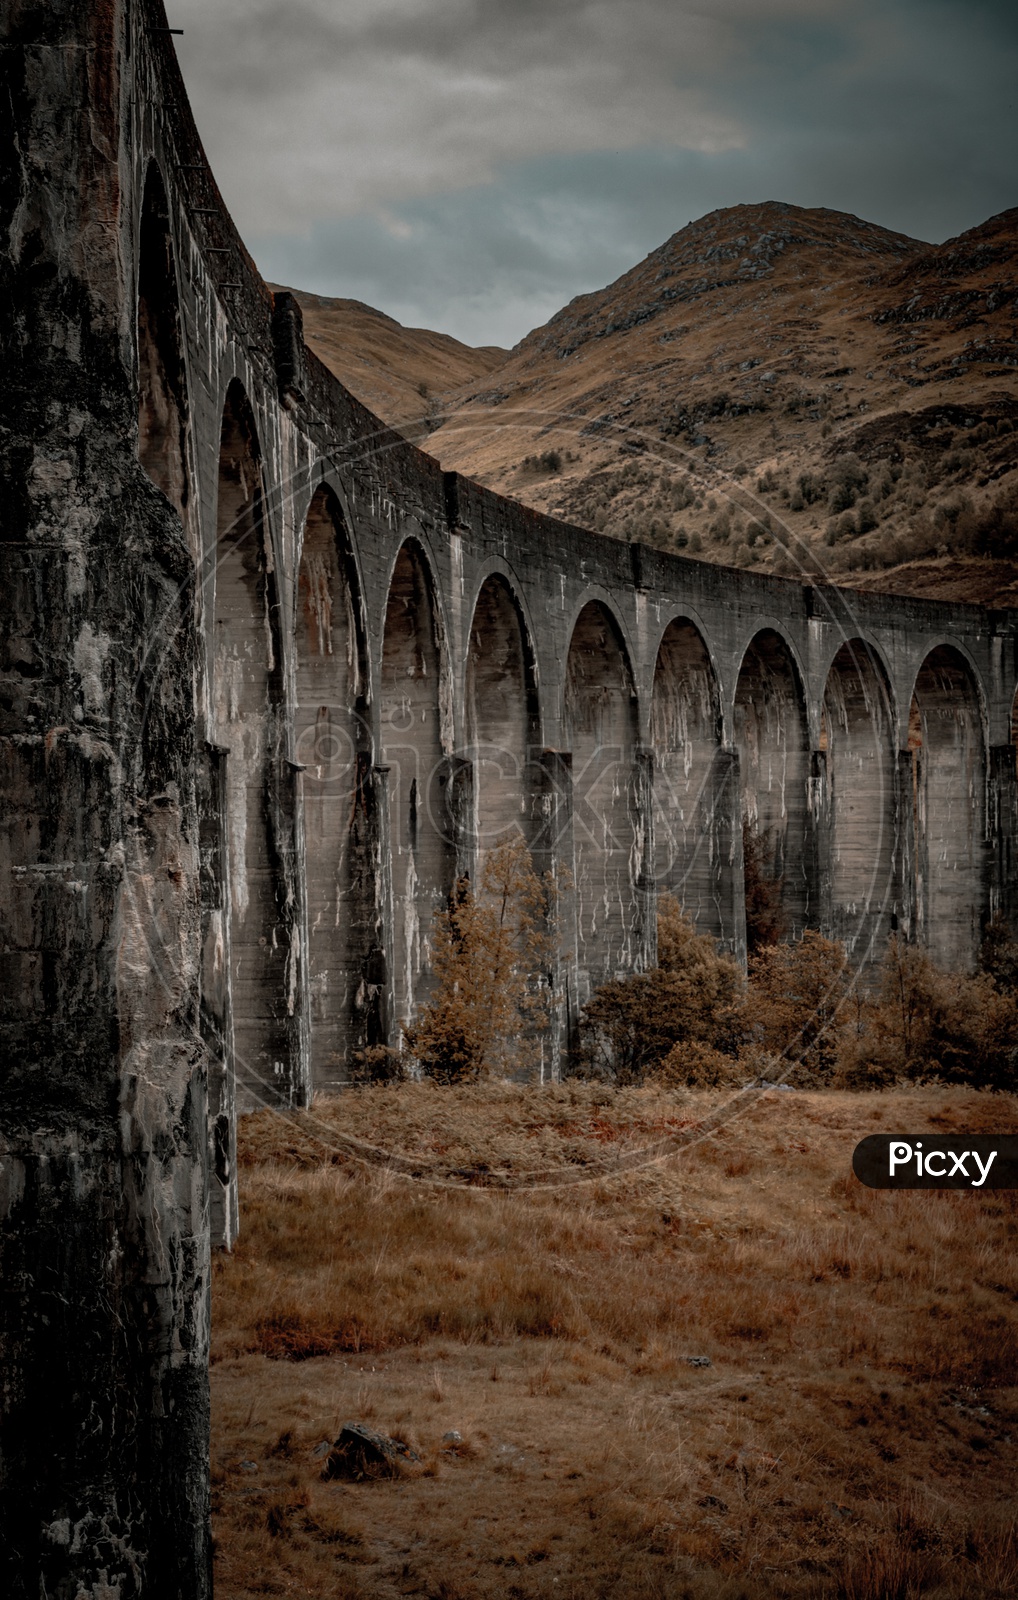 The Harry Potter Bridge